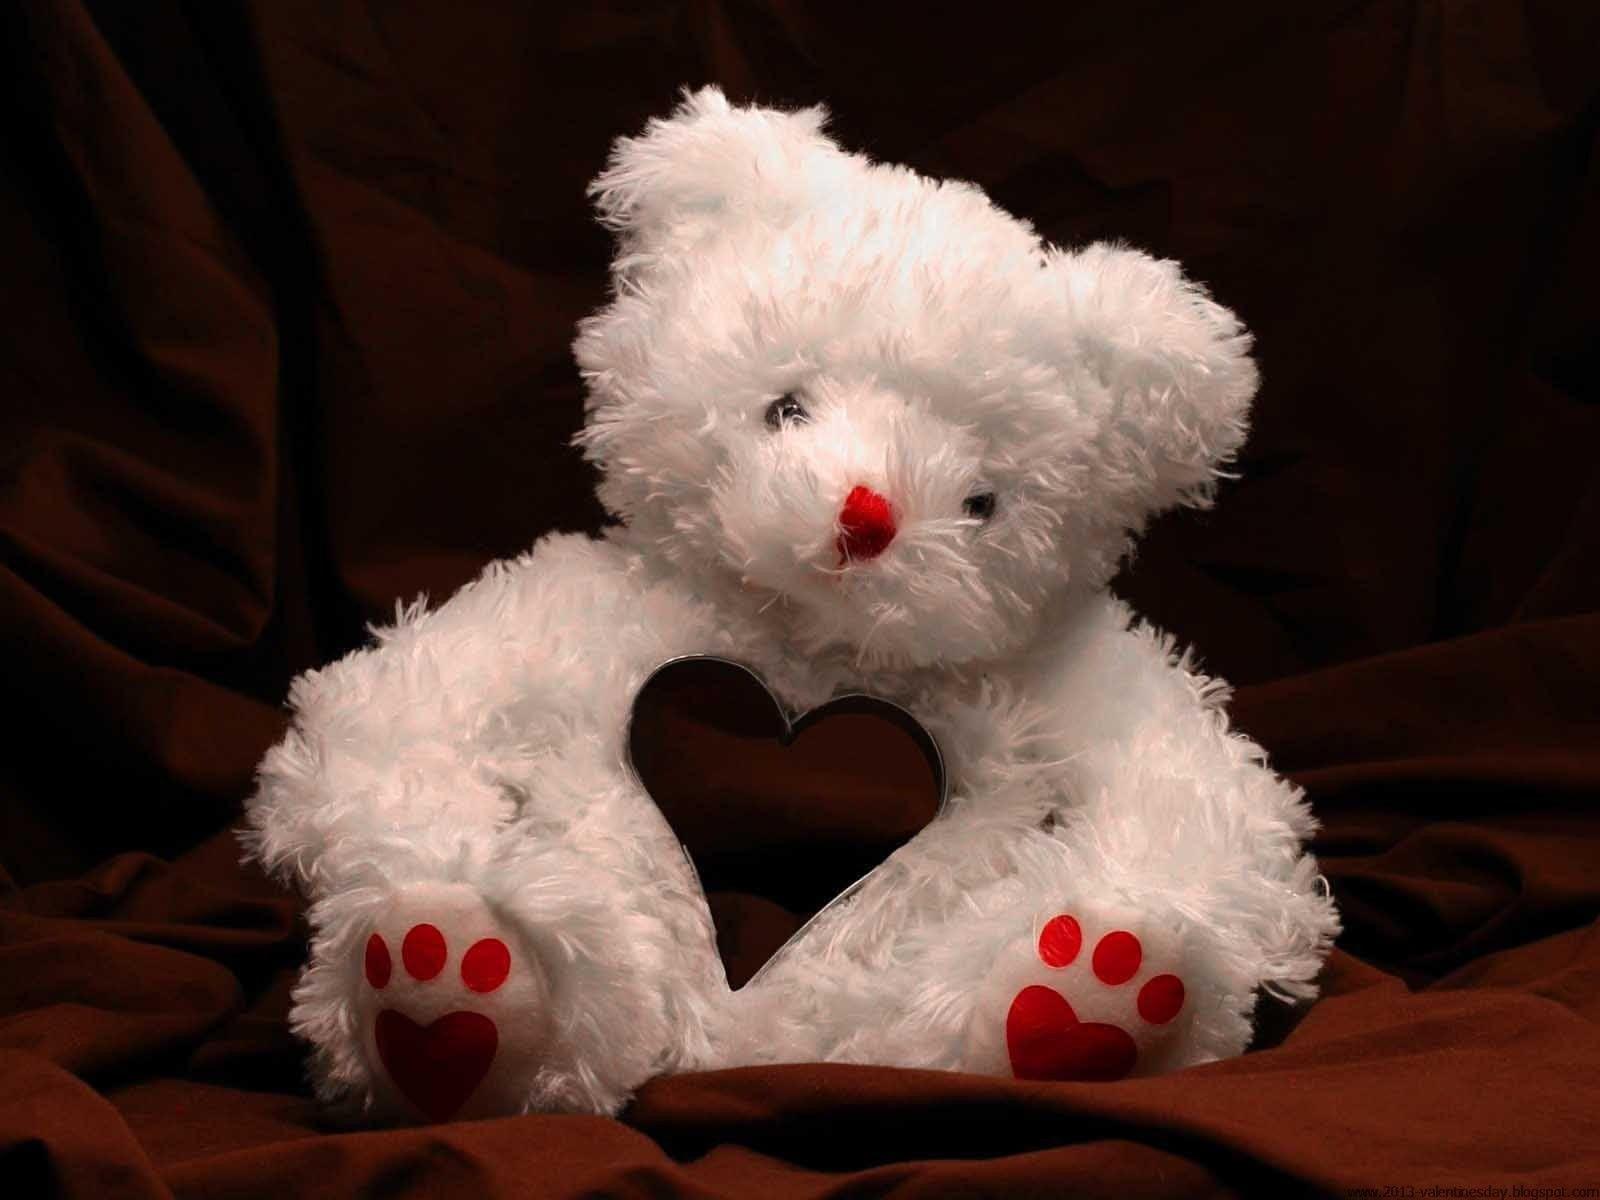 Cute Teddy Bear latest HD picture